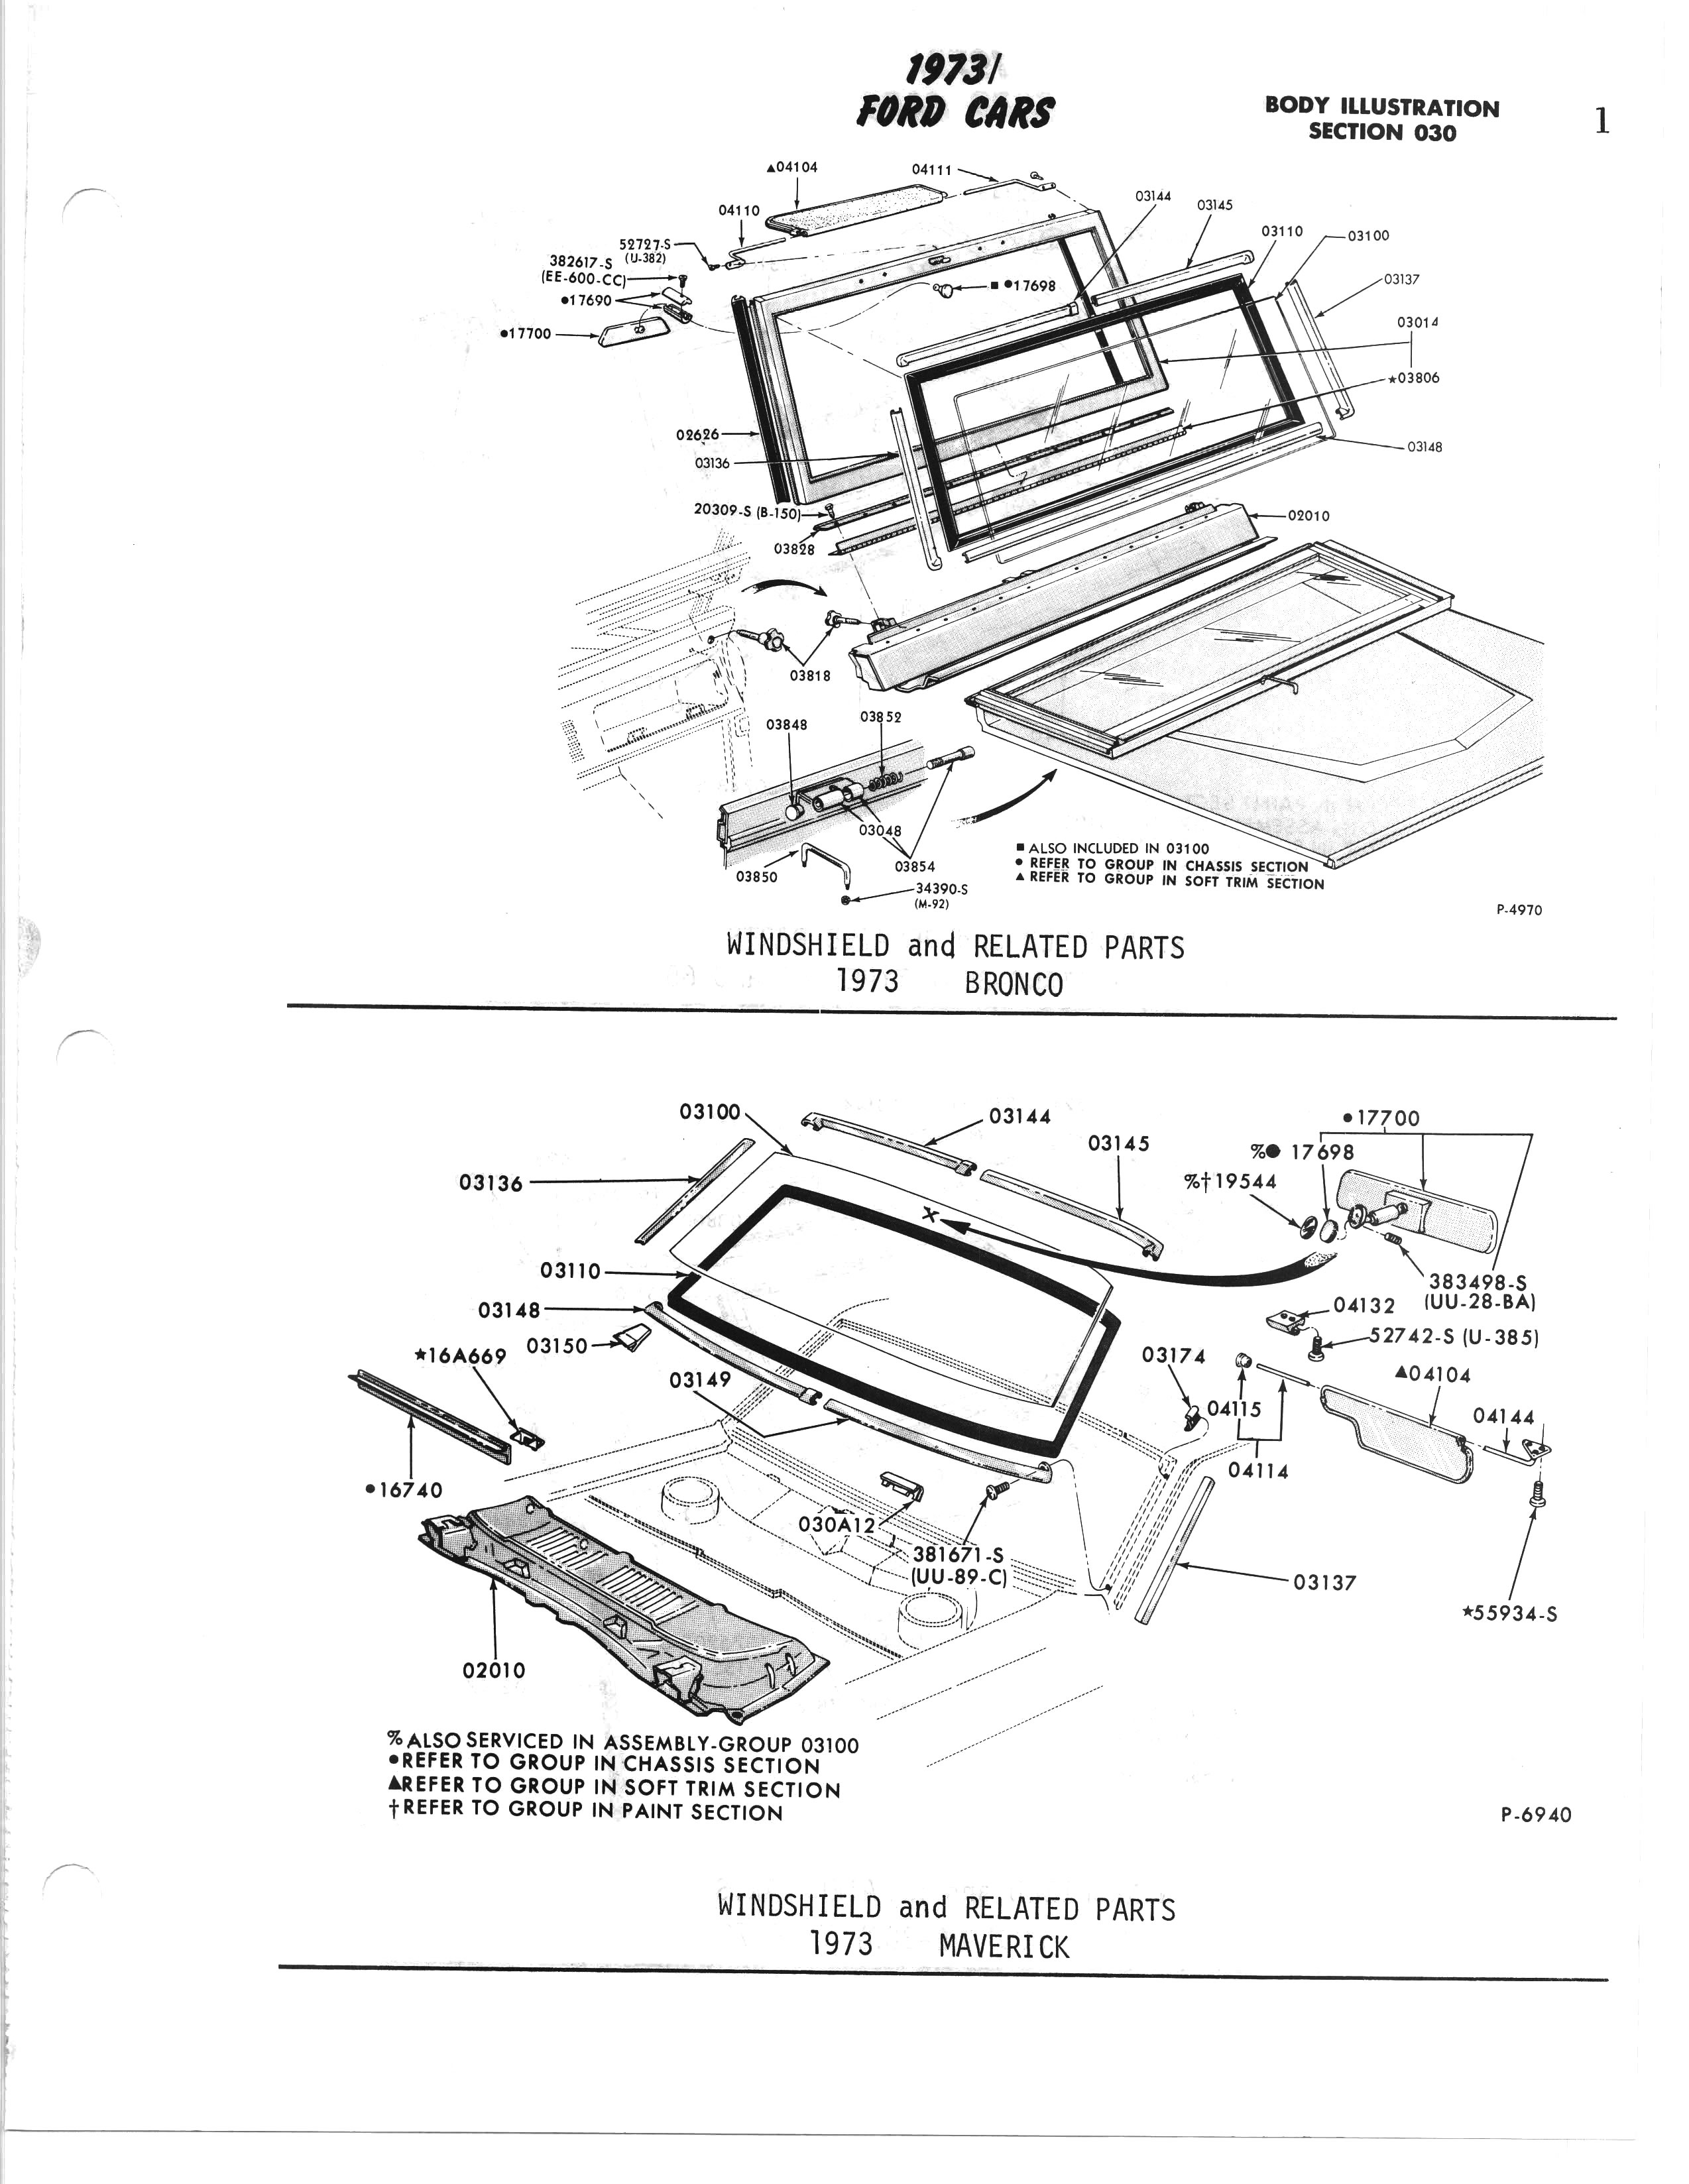 1973 Ford Parts Illustrations - Section 000 / Ford1973V2pix0542.jpg